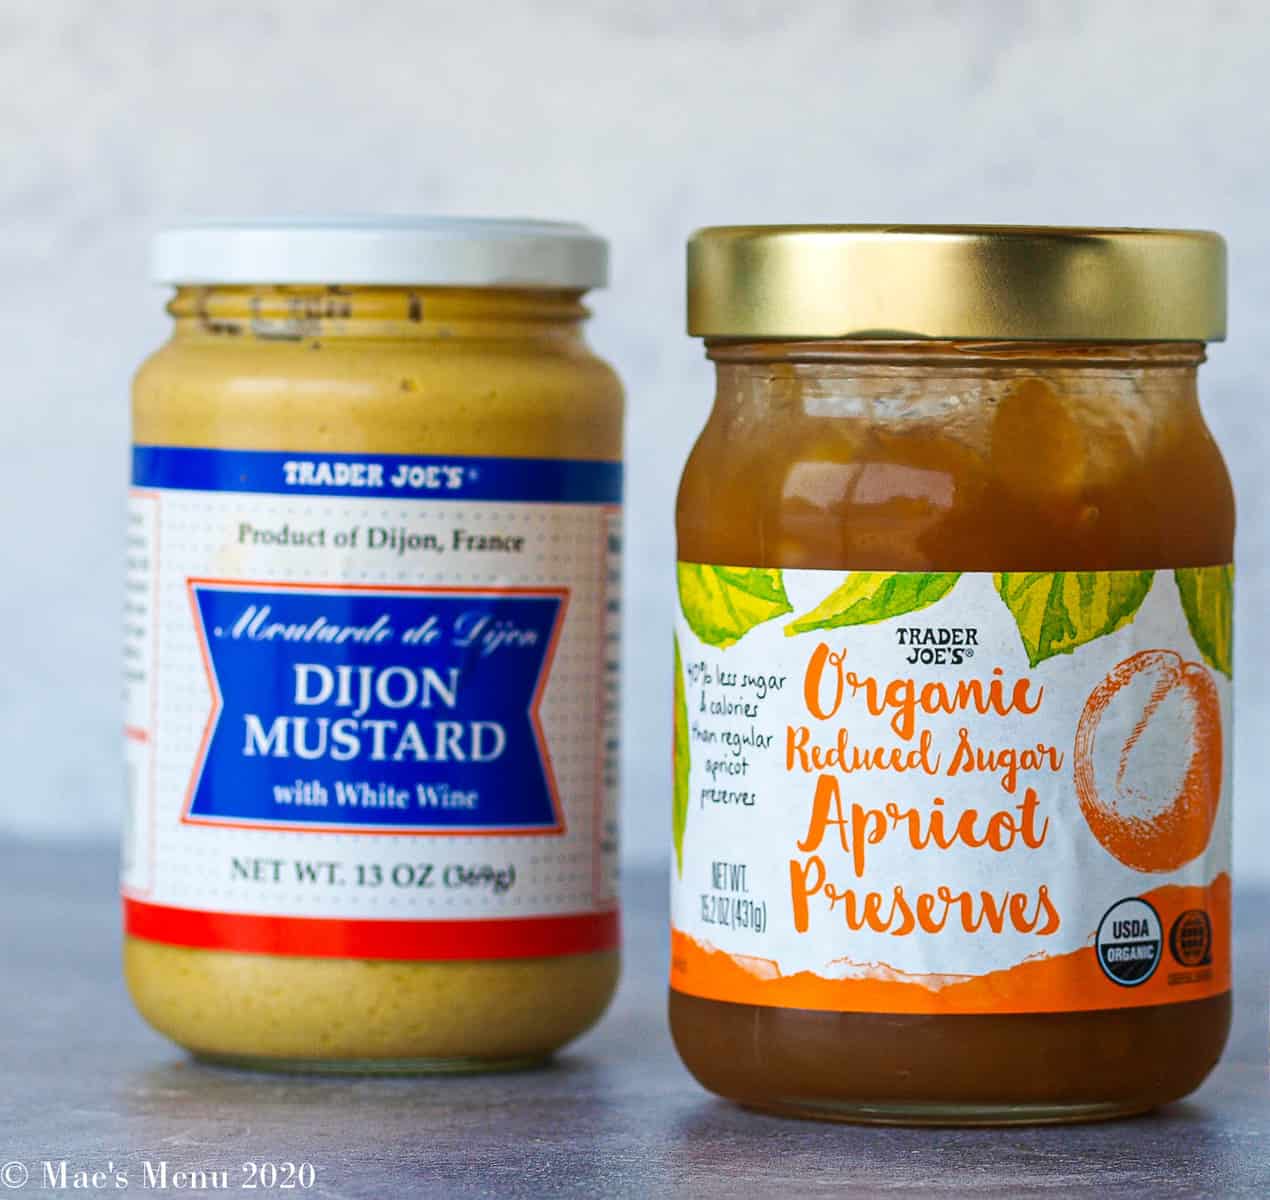 a jar of dijon mustard and a jar of reduced sugar apricot jam